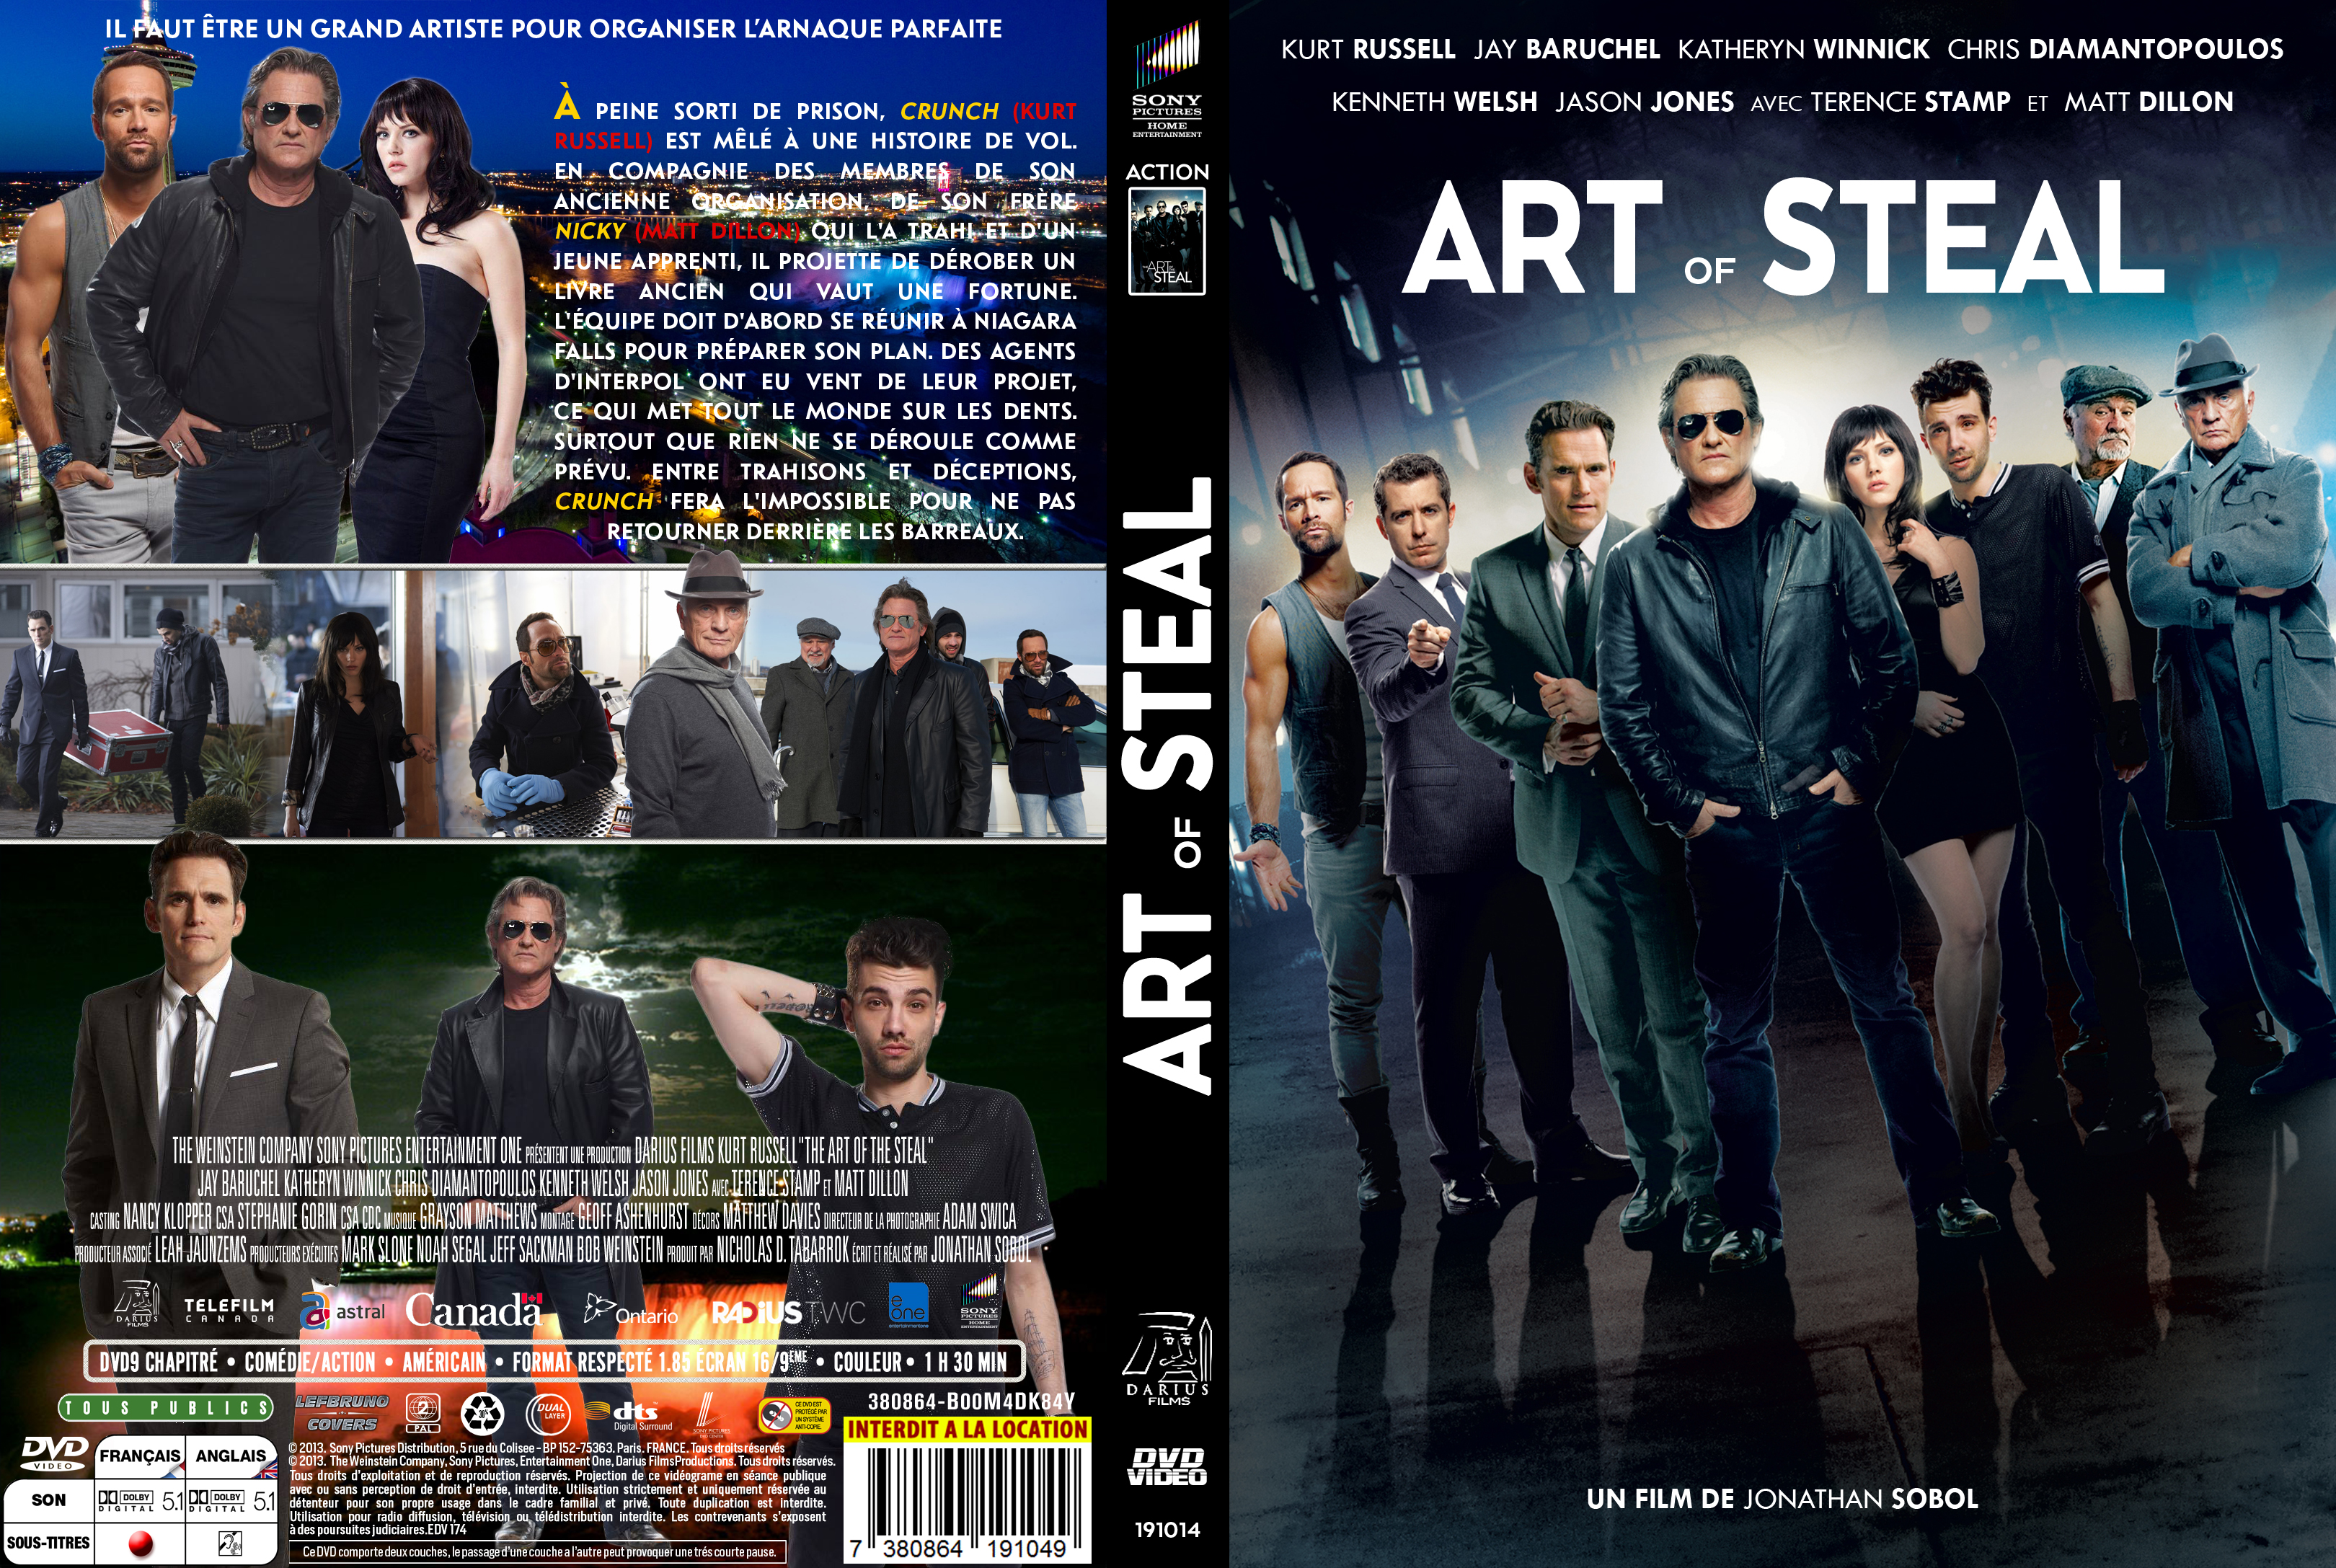 Jaquette DVD Art of Steal custom